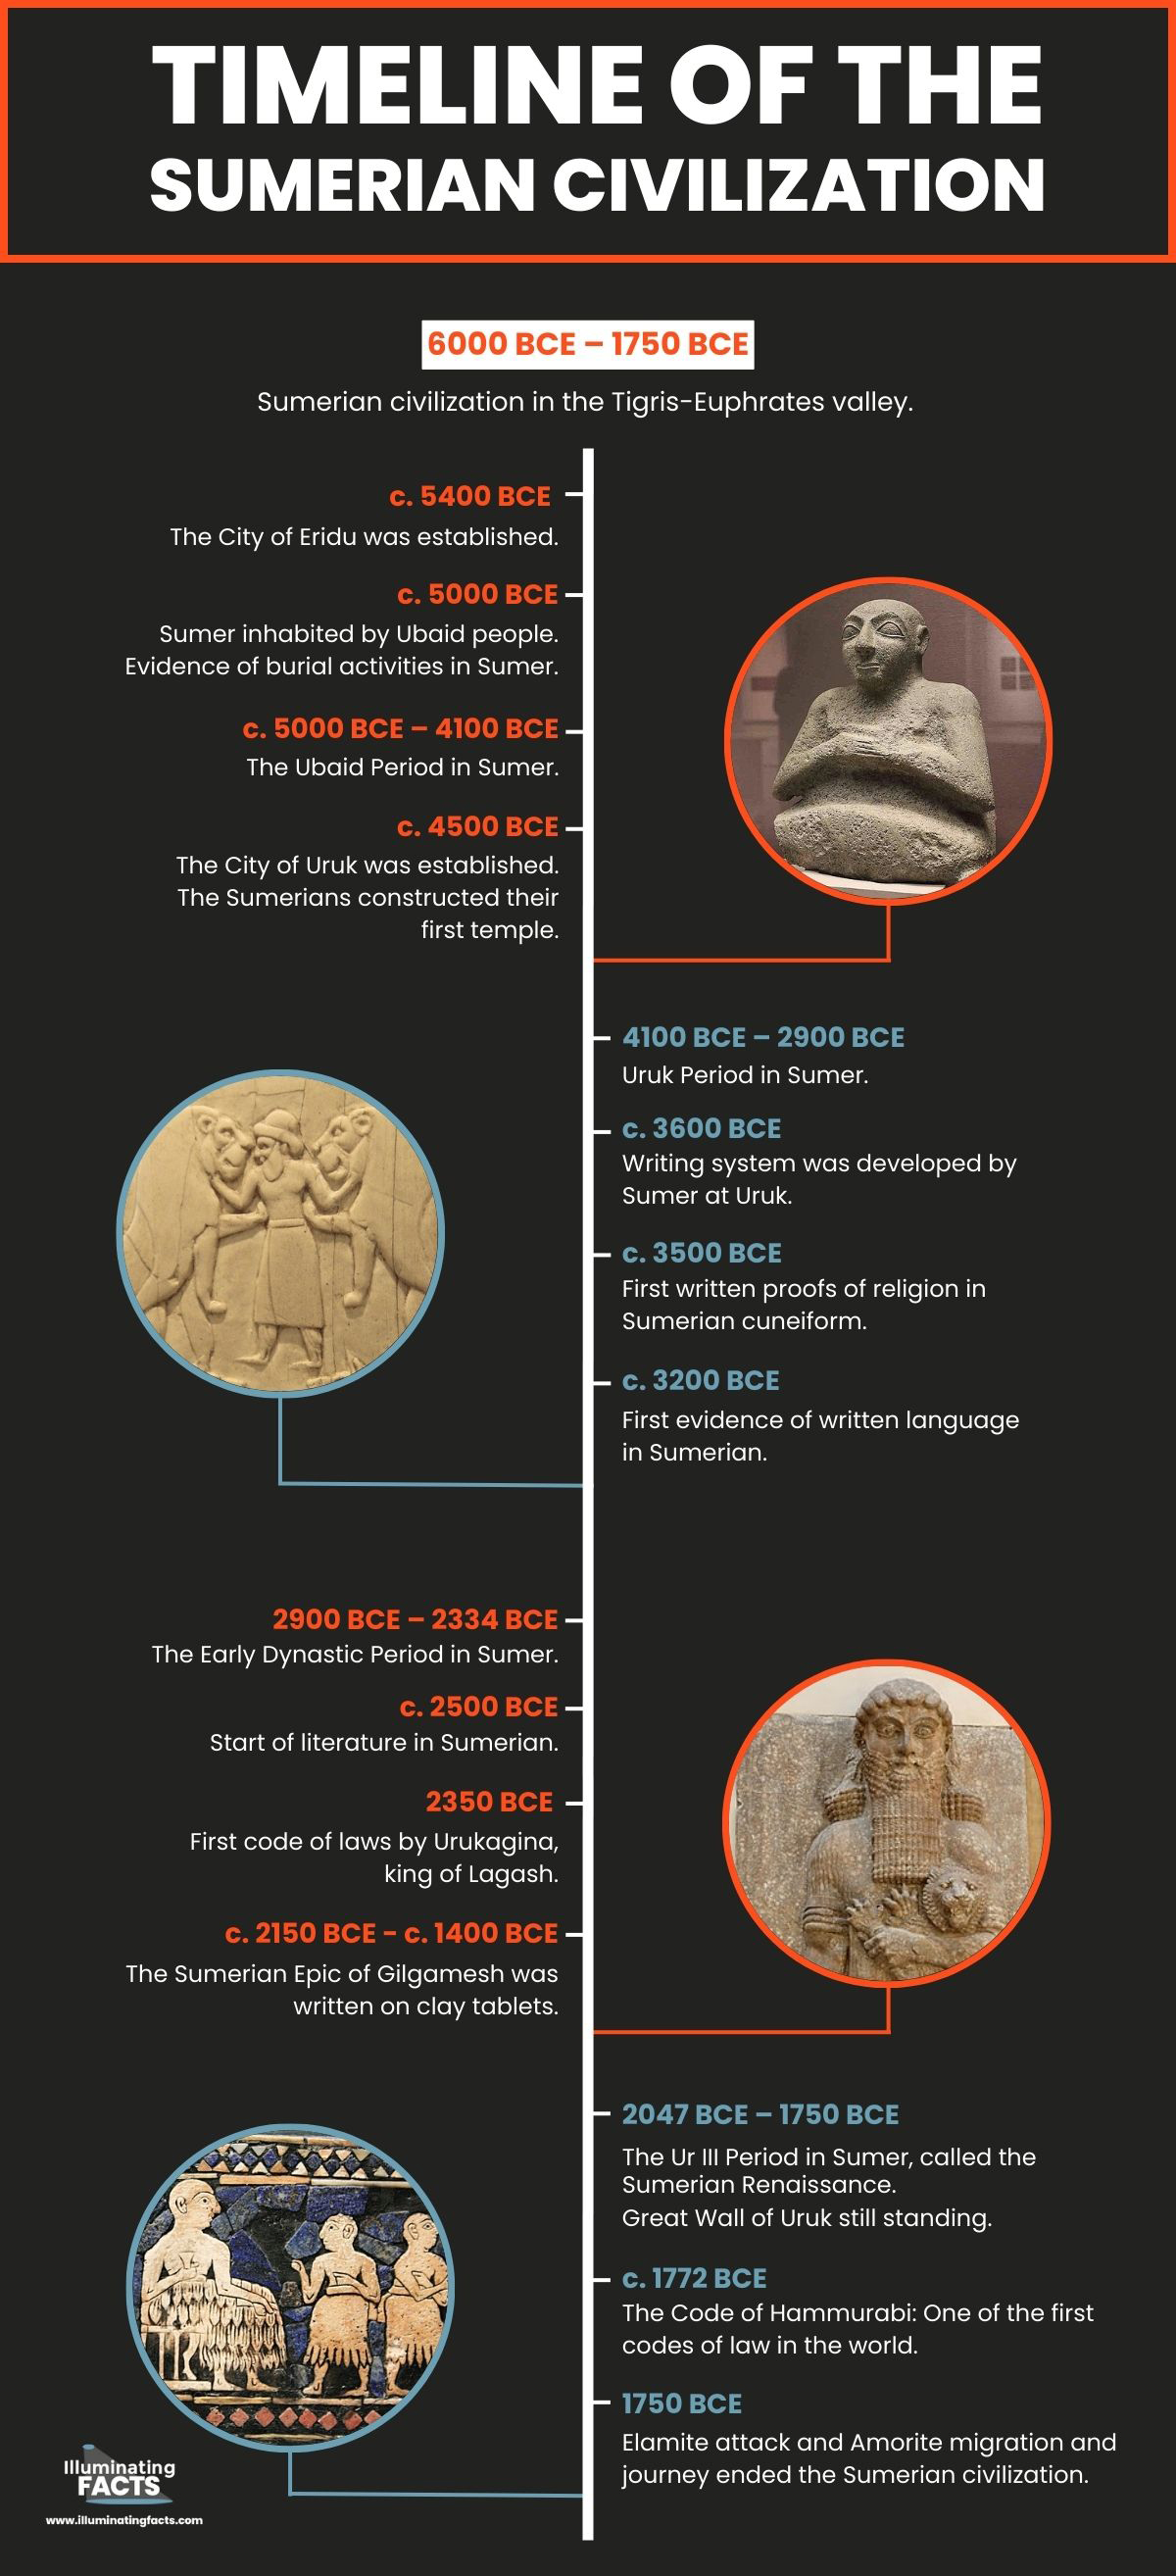 Timeline of the Sumerian civilization